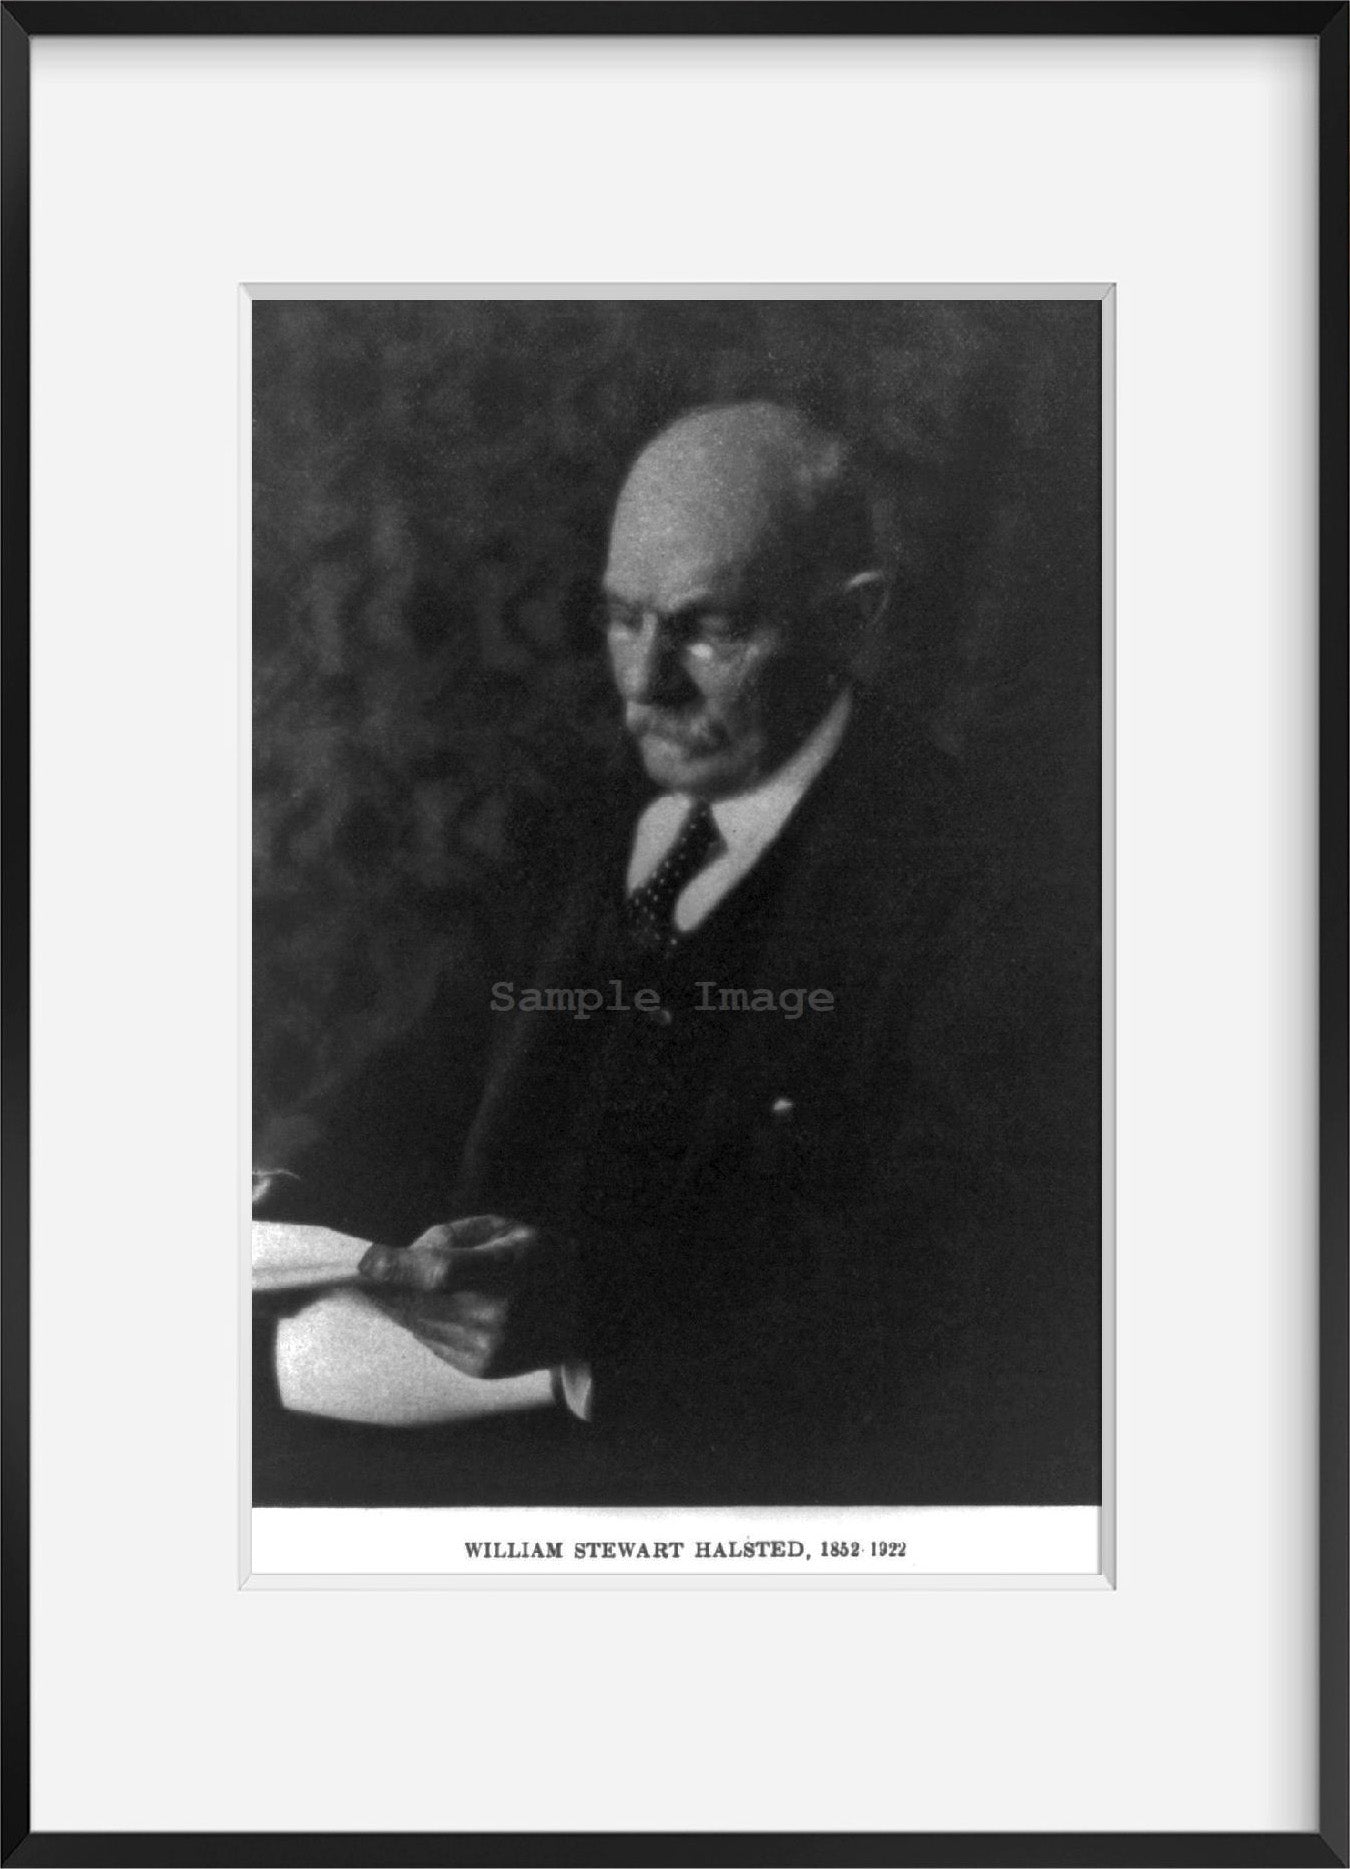 photograph of William Stewart Halsted, 1852-1922, half-length portrait